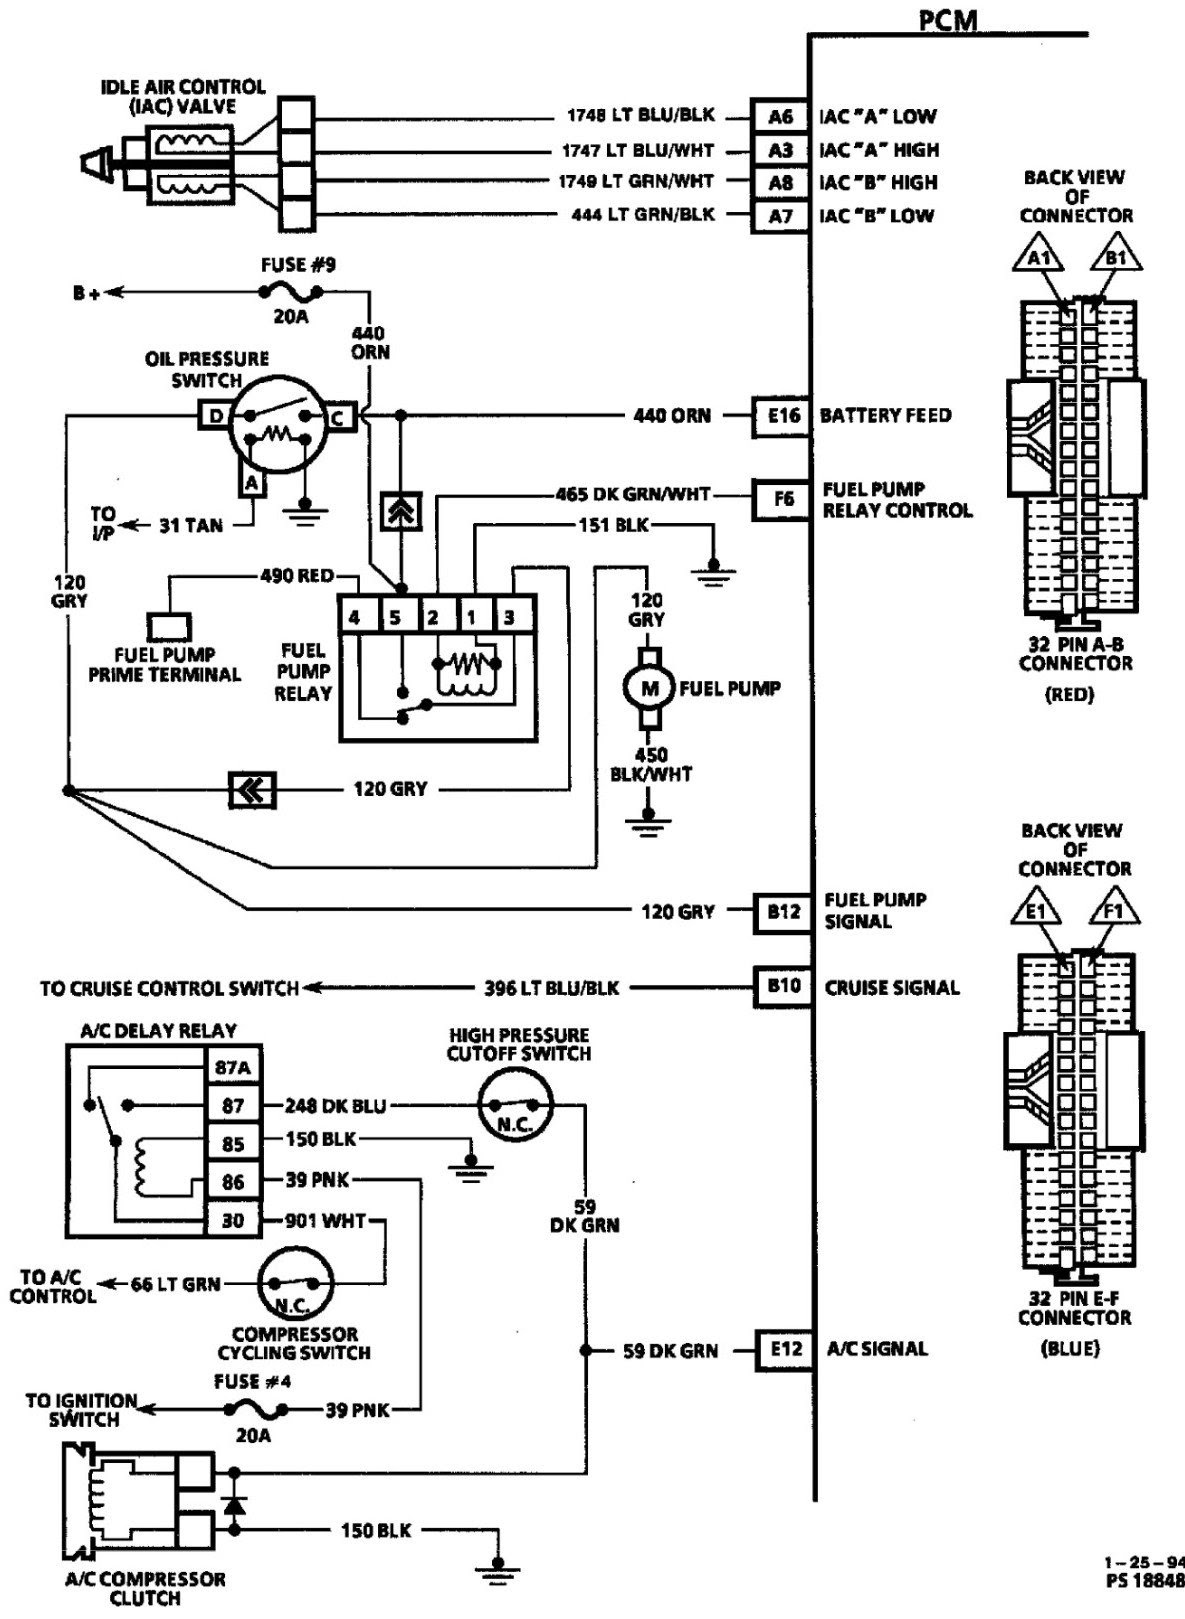 2005 Chevy Blazer Fuel Wire Diagram, S10 Fuel Gauge Wiring Diagram